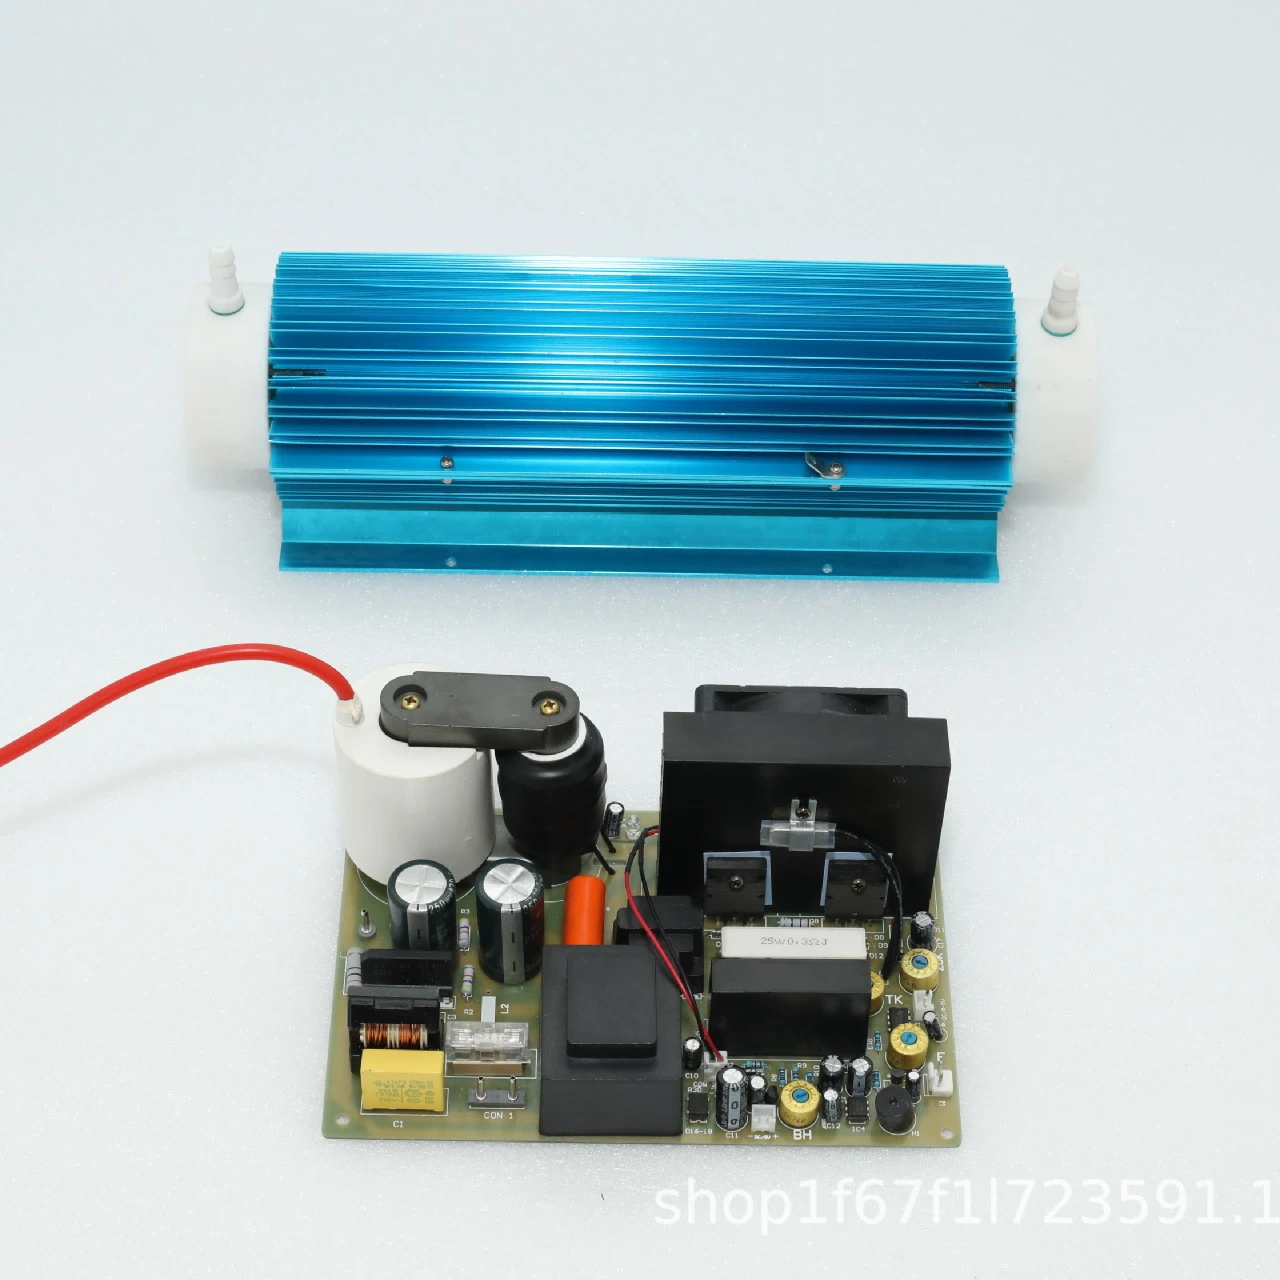 20G dual air cooled ozone generator kit dual heat dissipation ozone fittings (1600532462522)